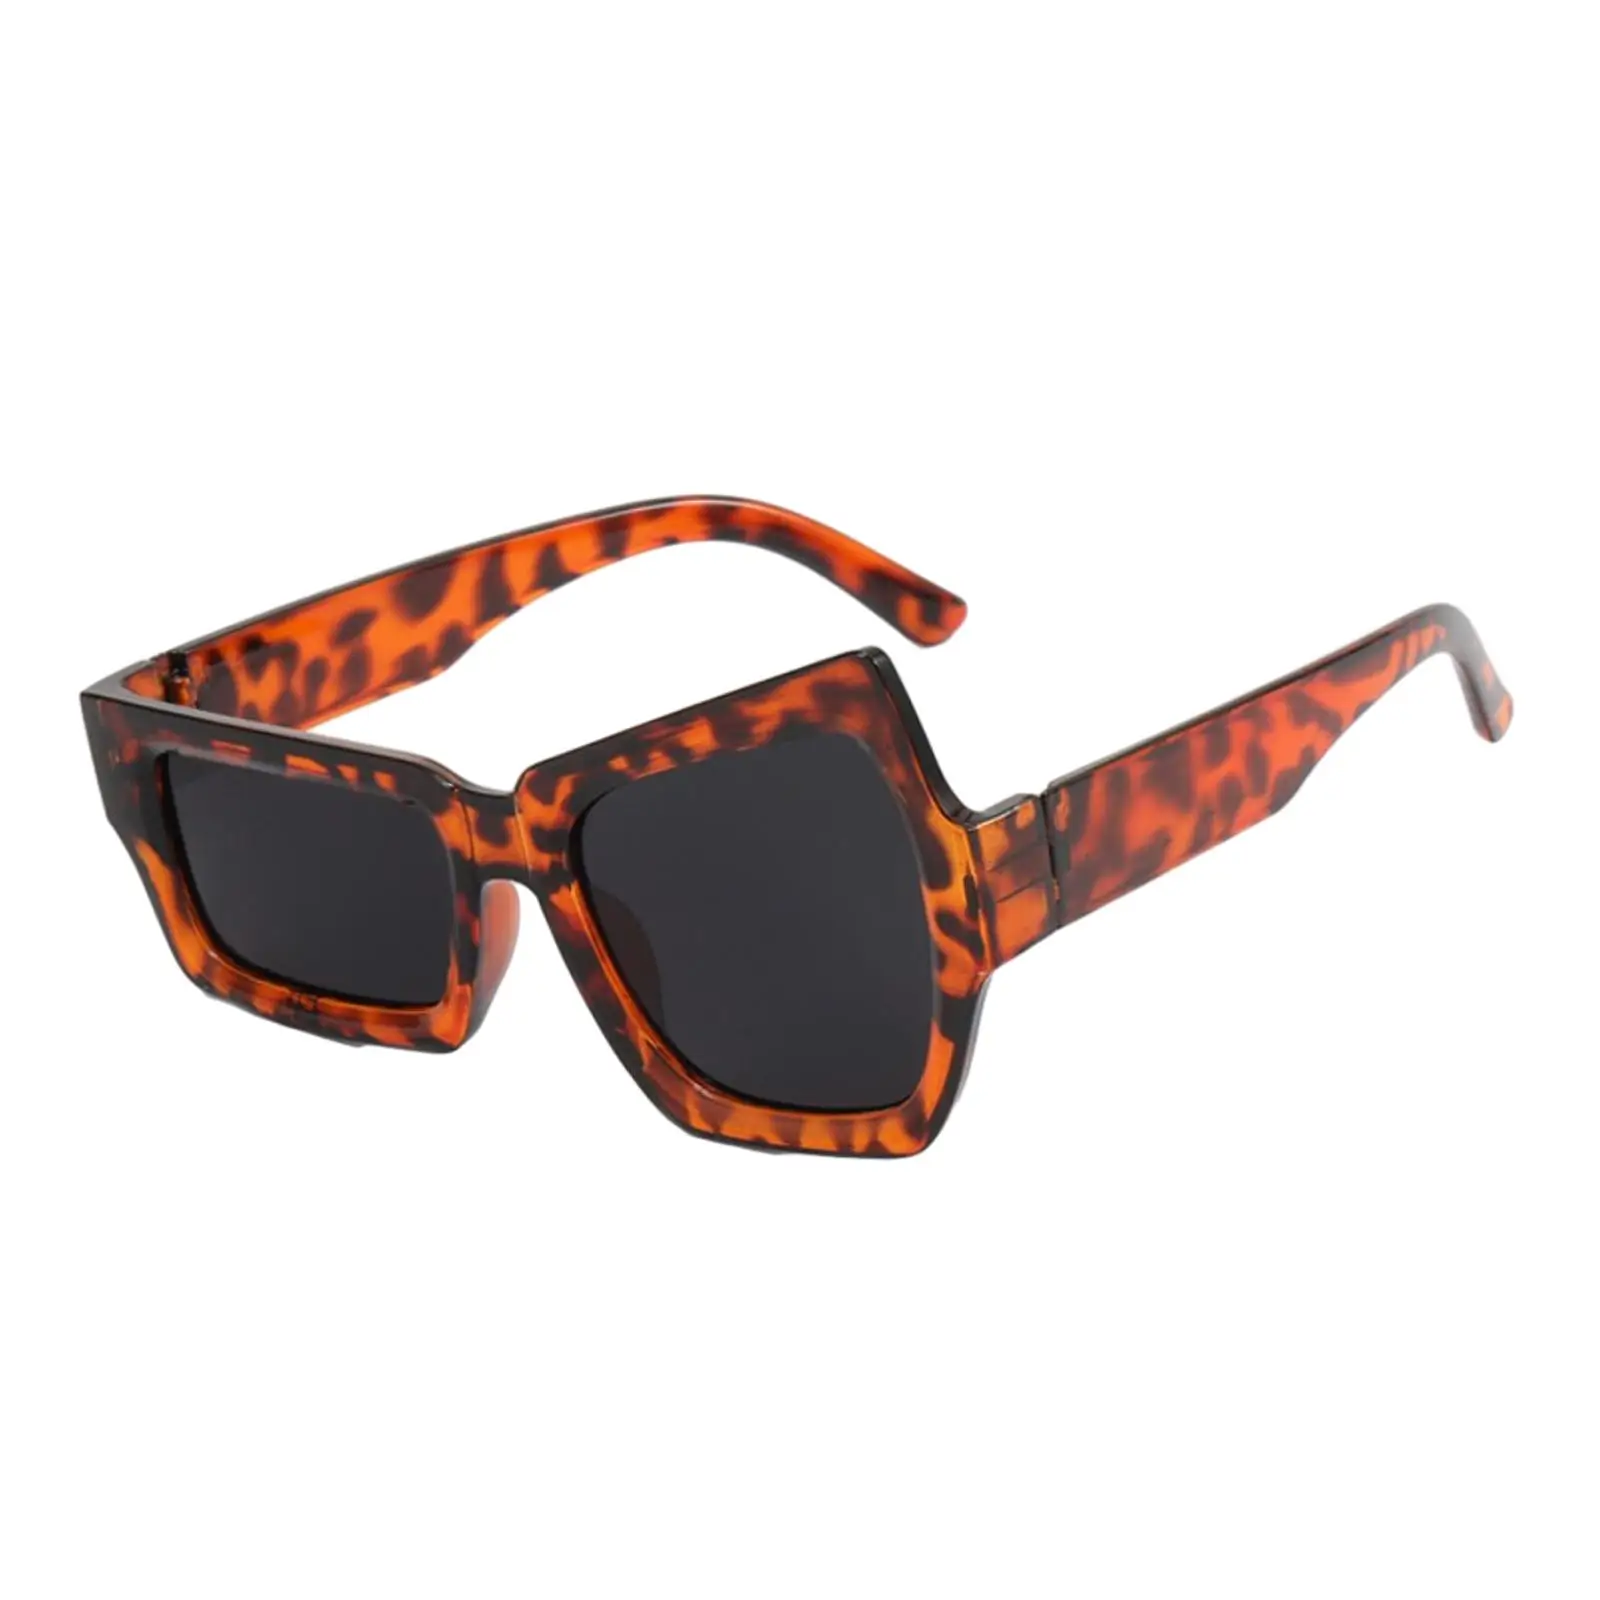 Funny Sunglasses Sun Protection Eyewear Stylish for Shopping Beach Traveling